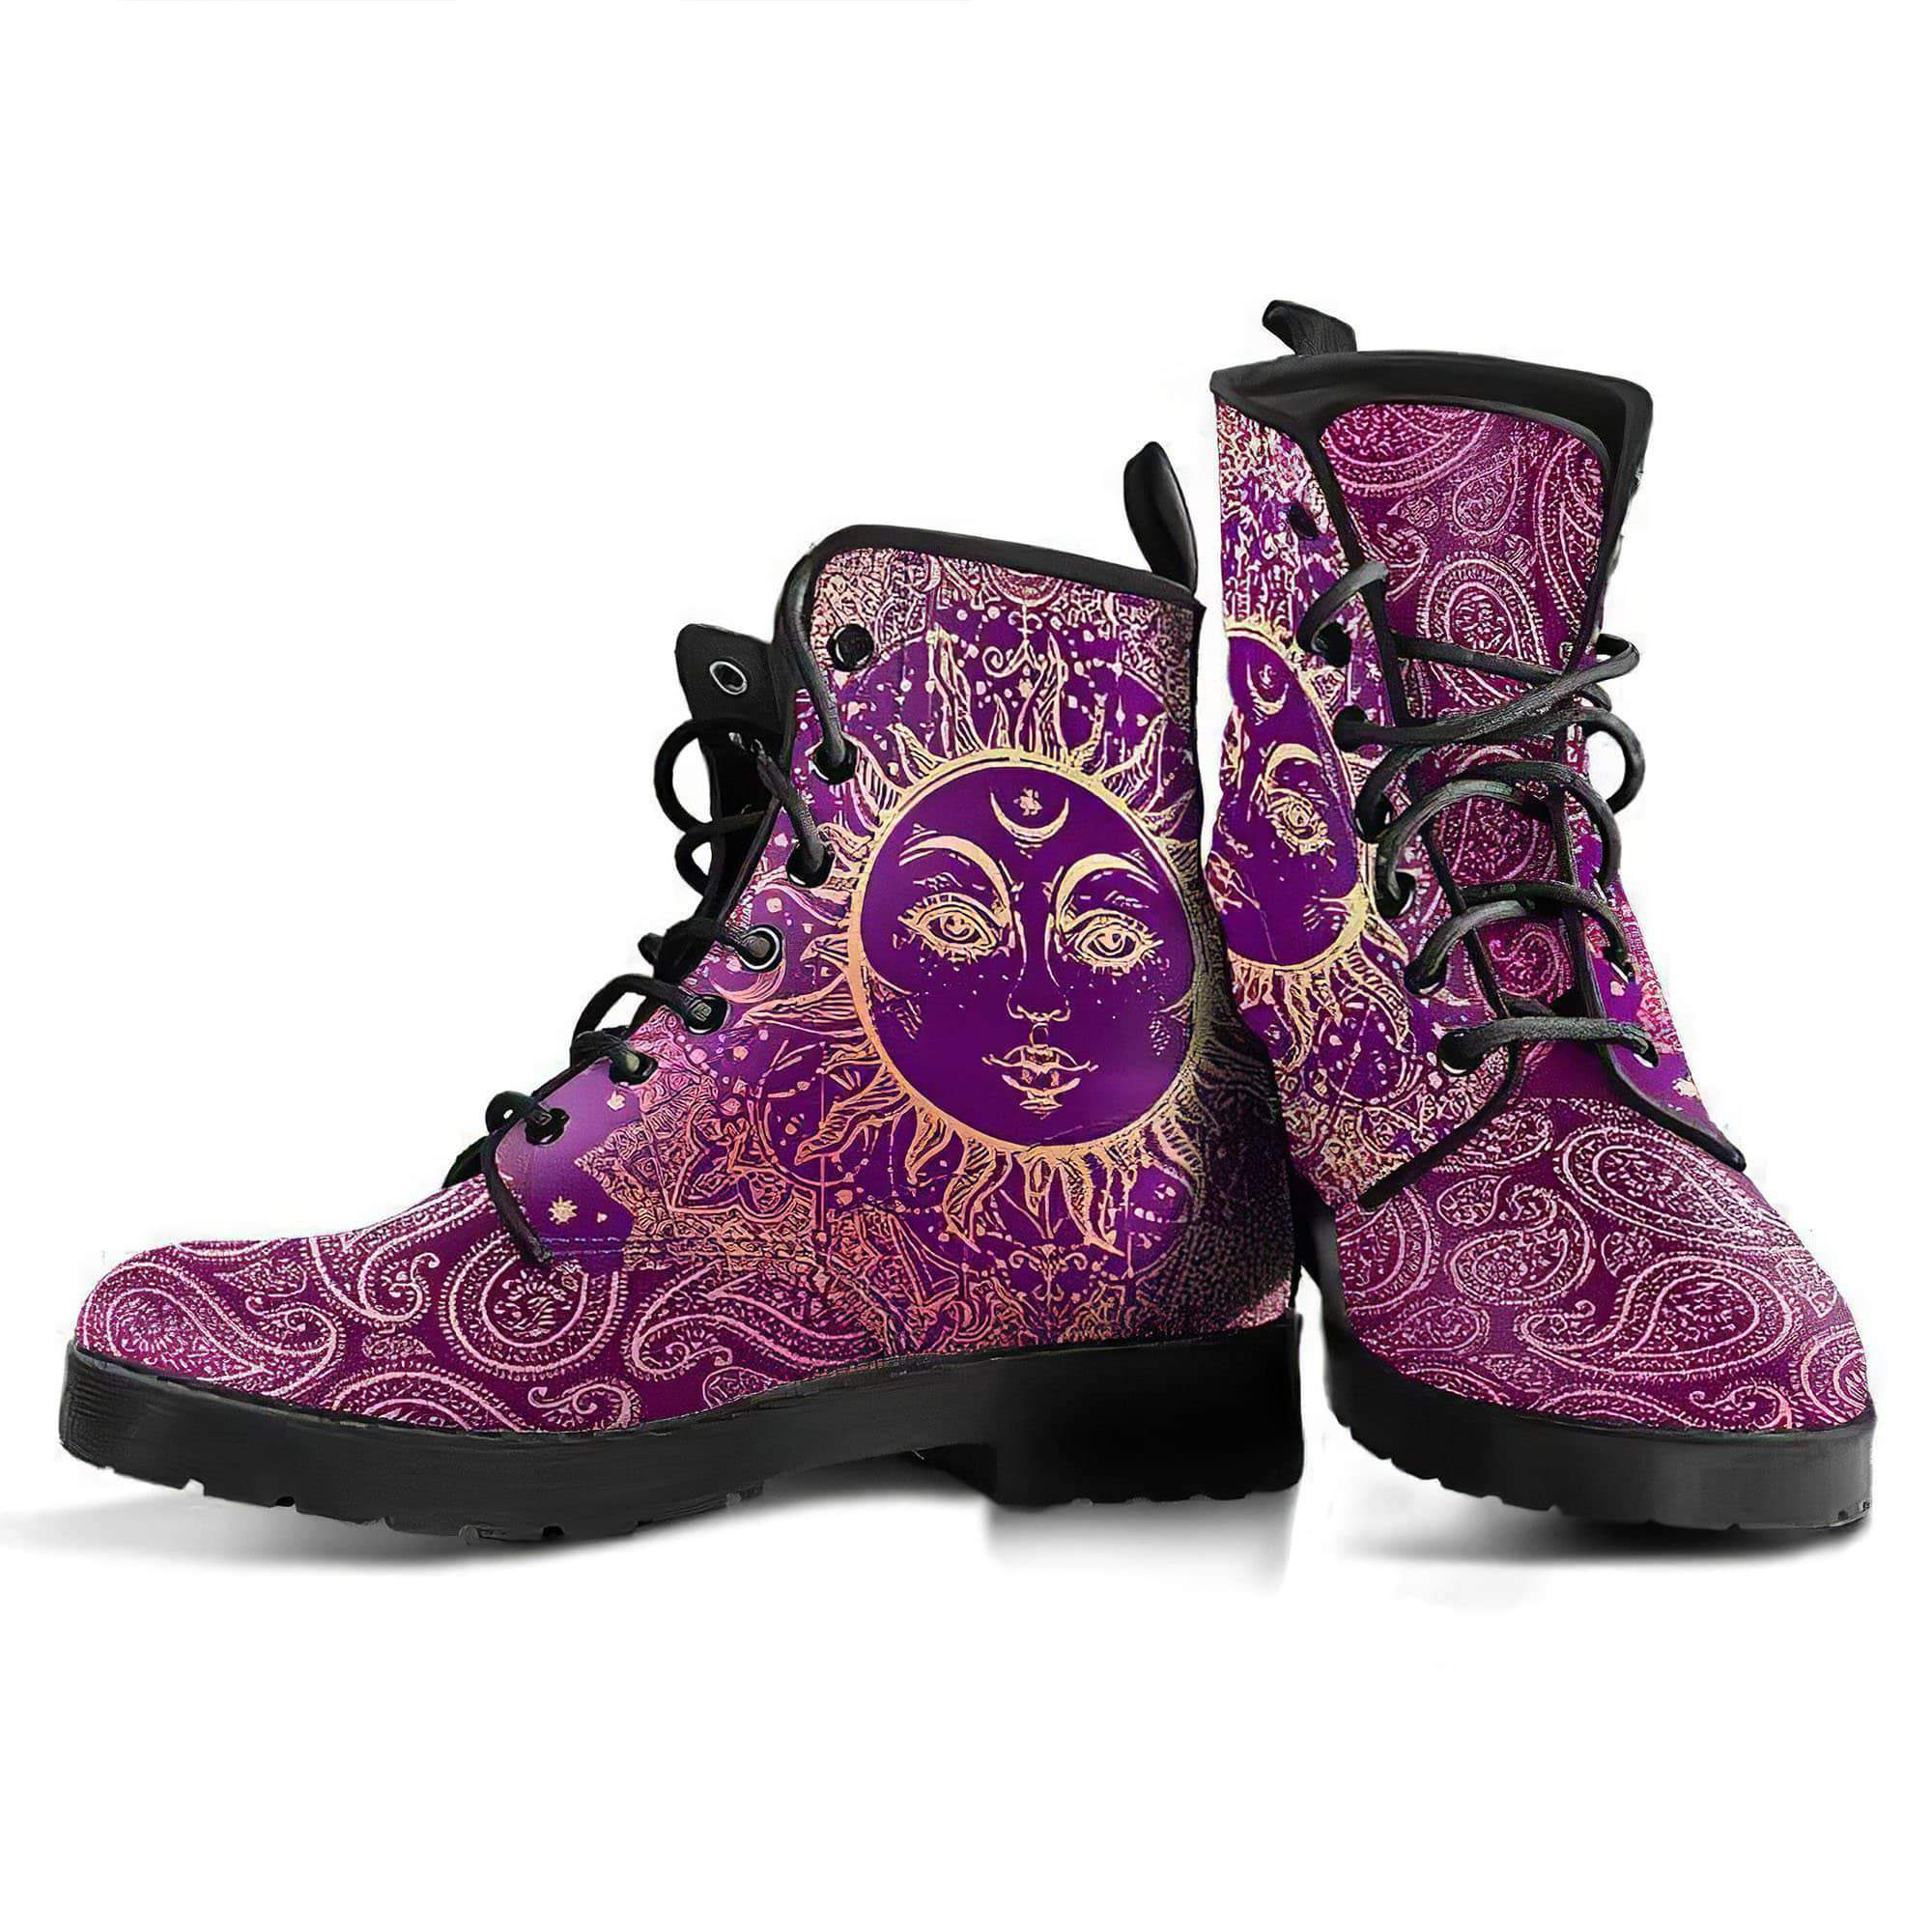 sun-henna-flowers-women-s-boots-vegan-friendly-leather-women-s-leather-boots-12051960397885.jpg